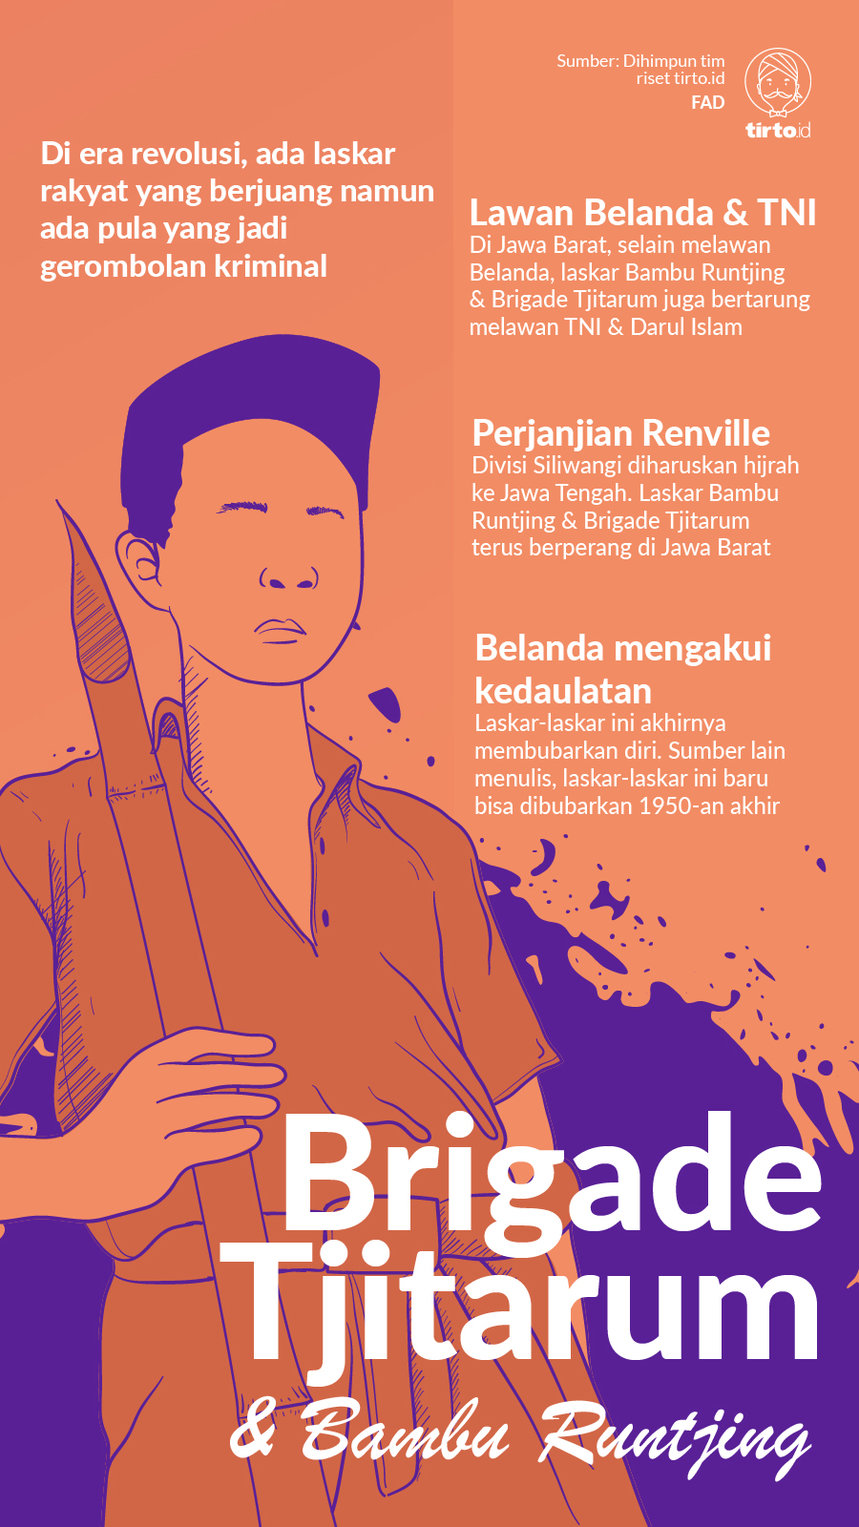 Infografik  Brigade Tjitarum & Bambu Runtjing